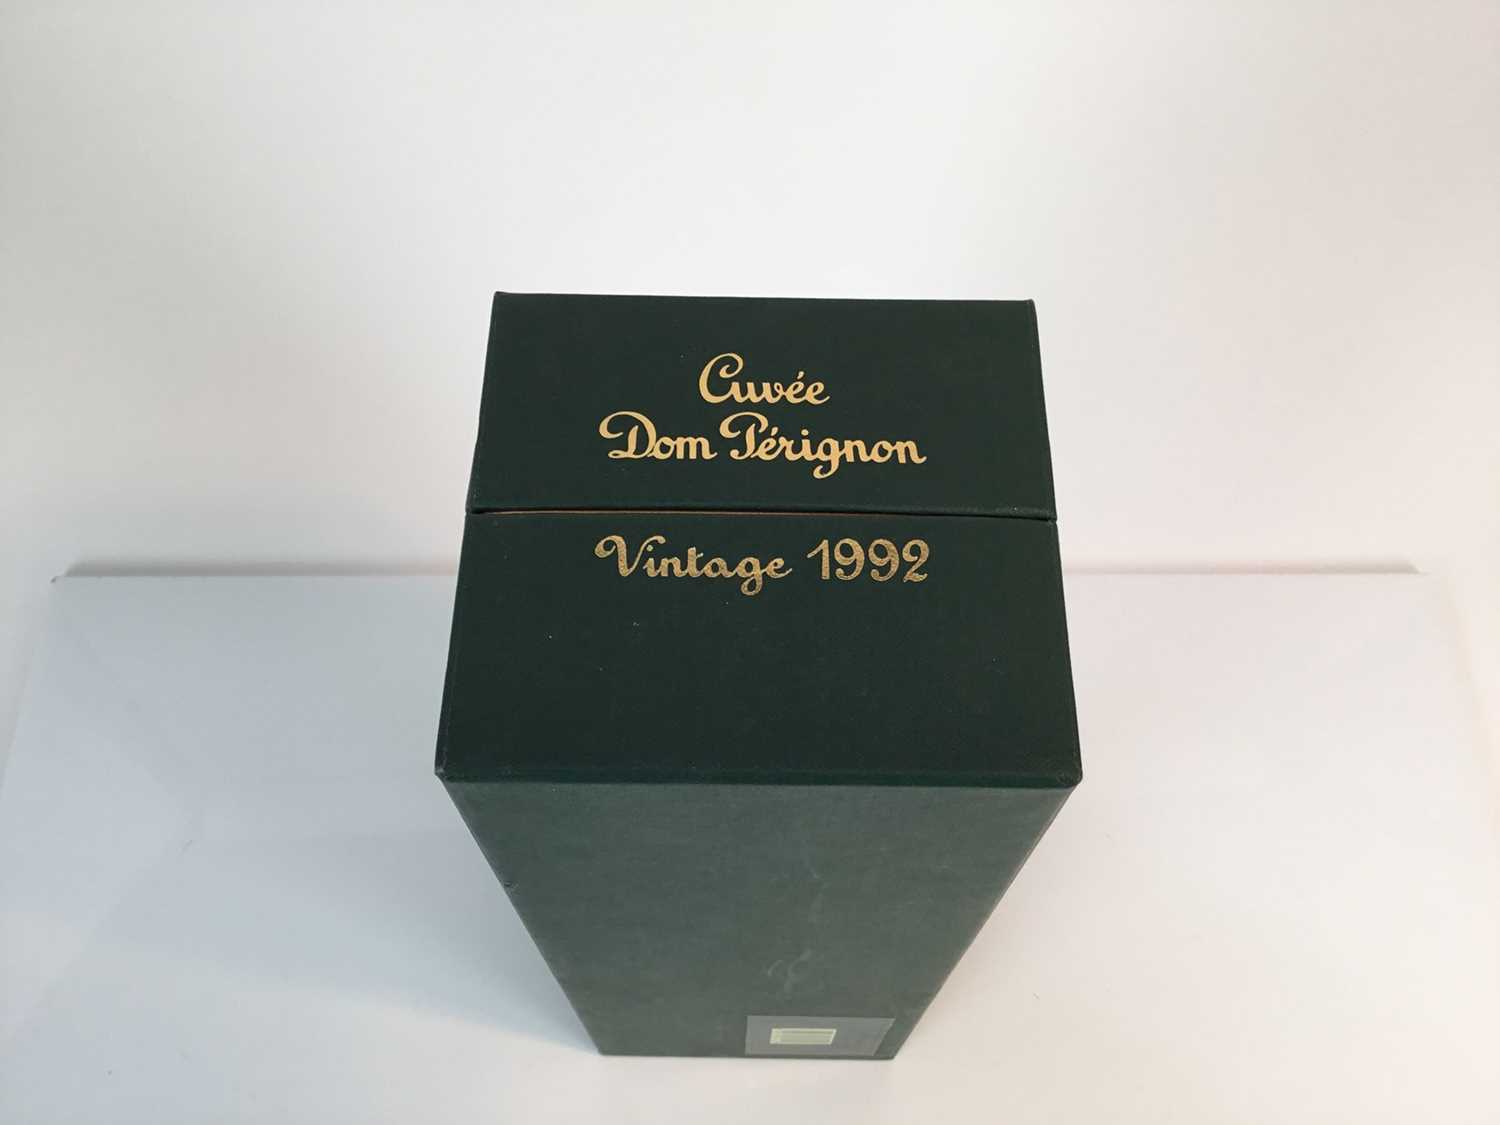 Champagne - one bottle, Dom Perignon 1992, in original sealed box - Image 3 of 4